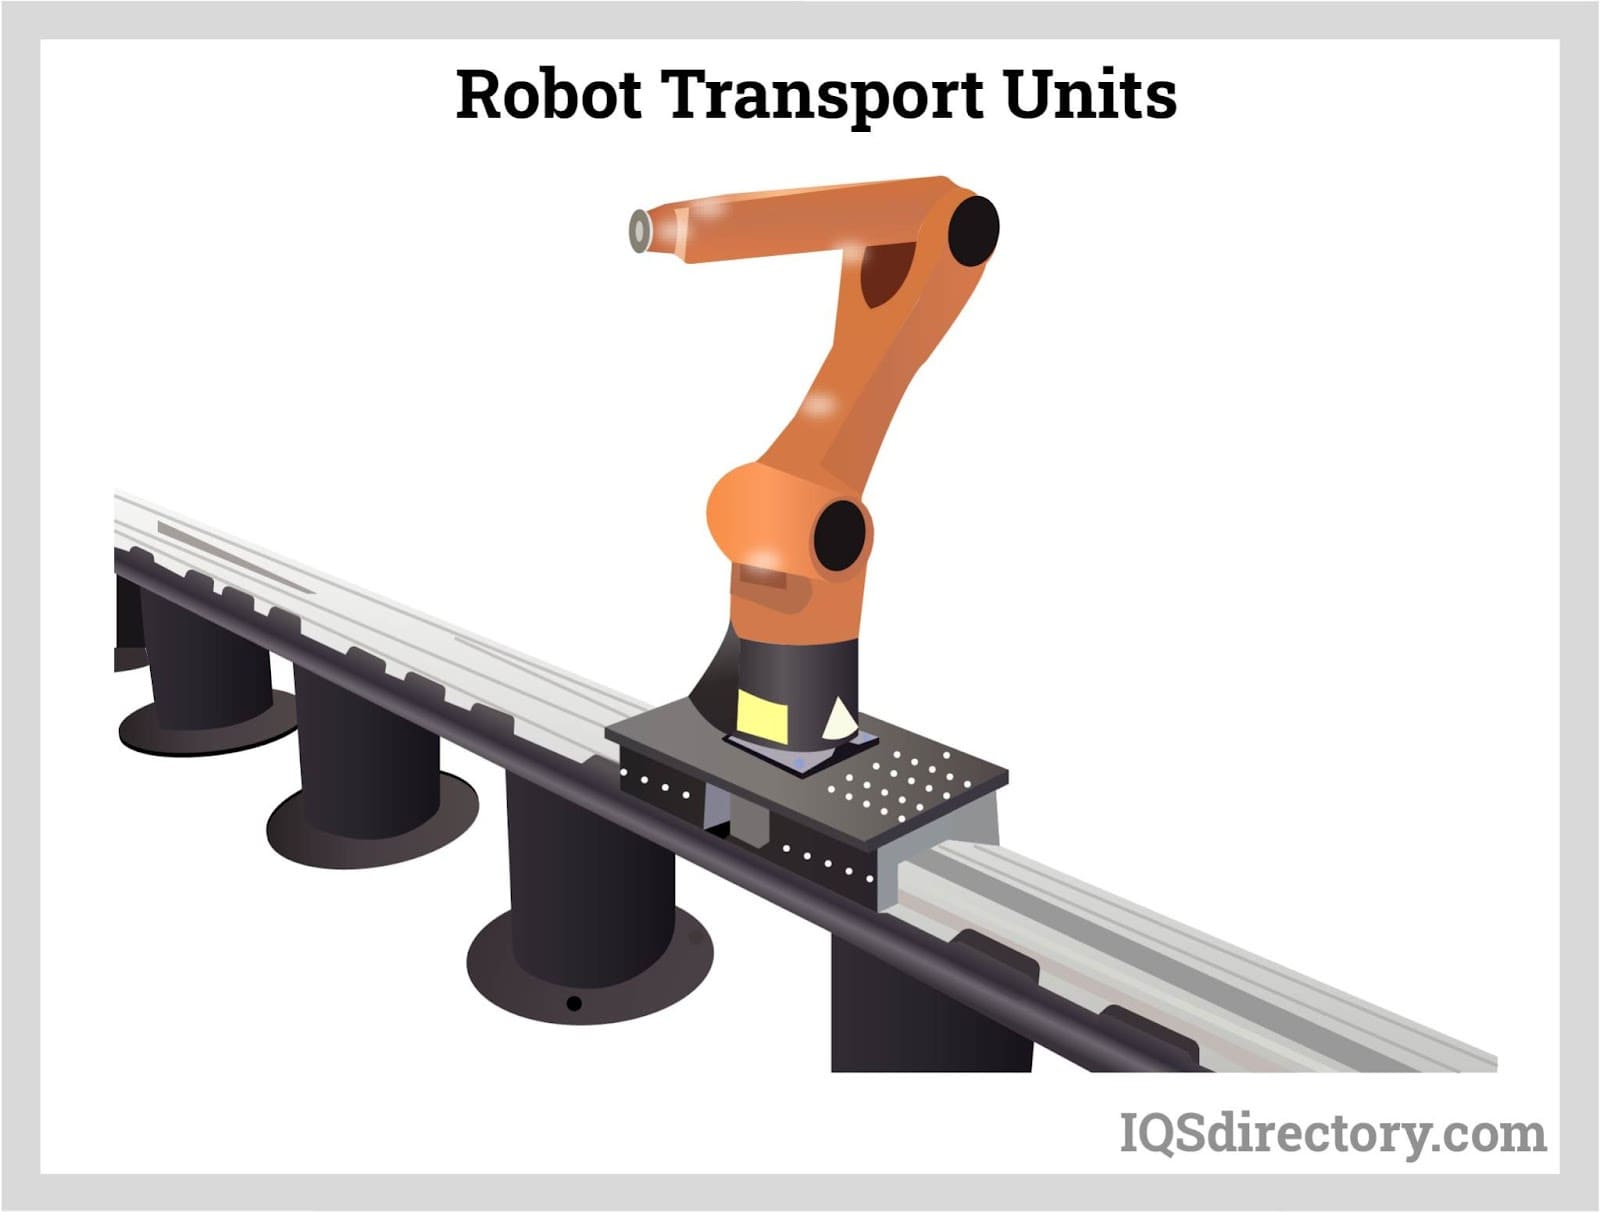 Robot Transport Units